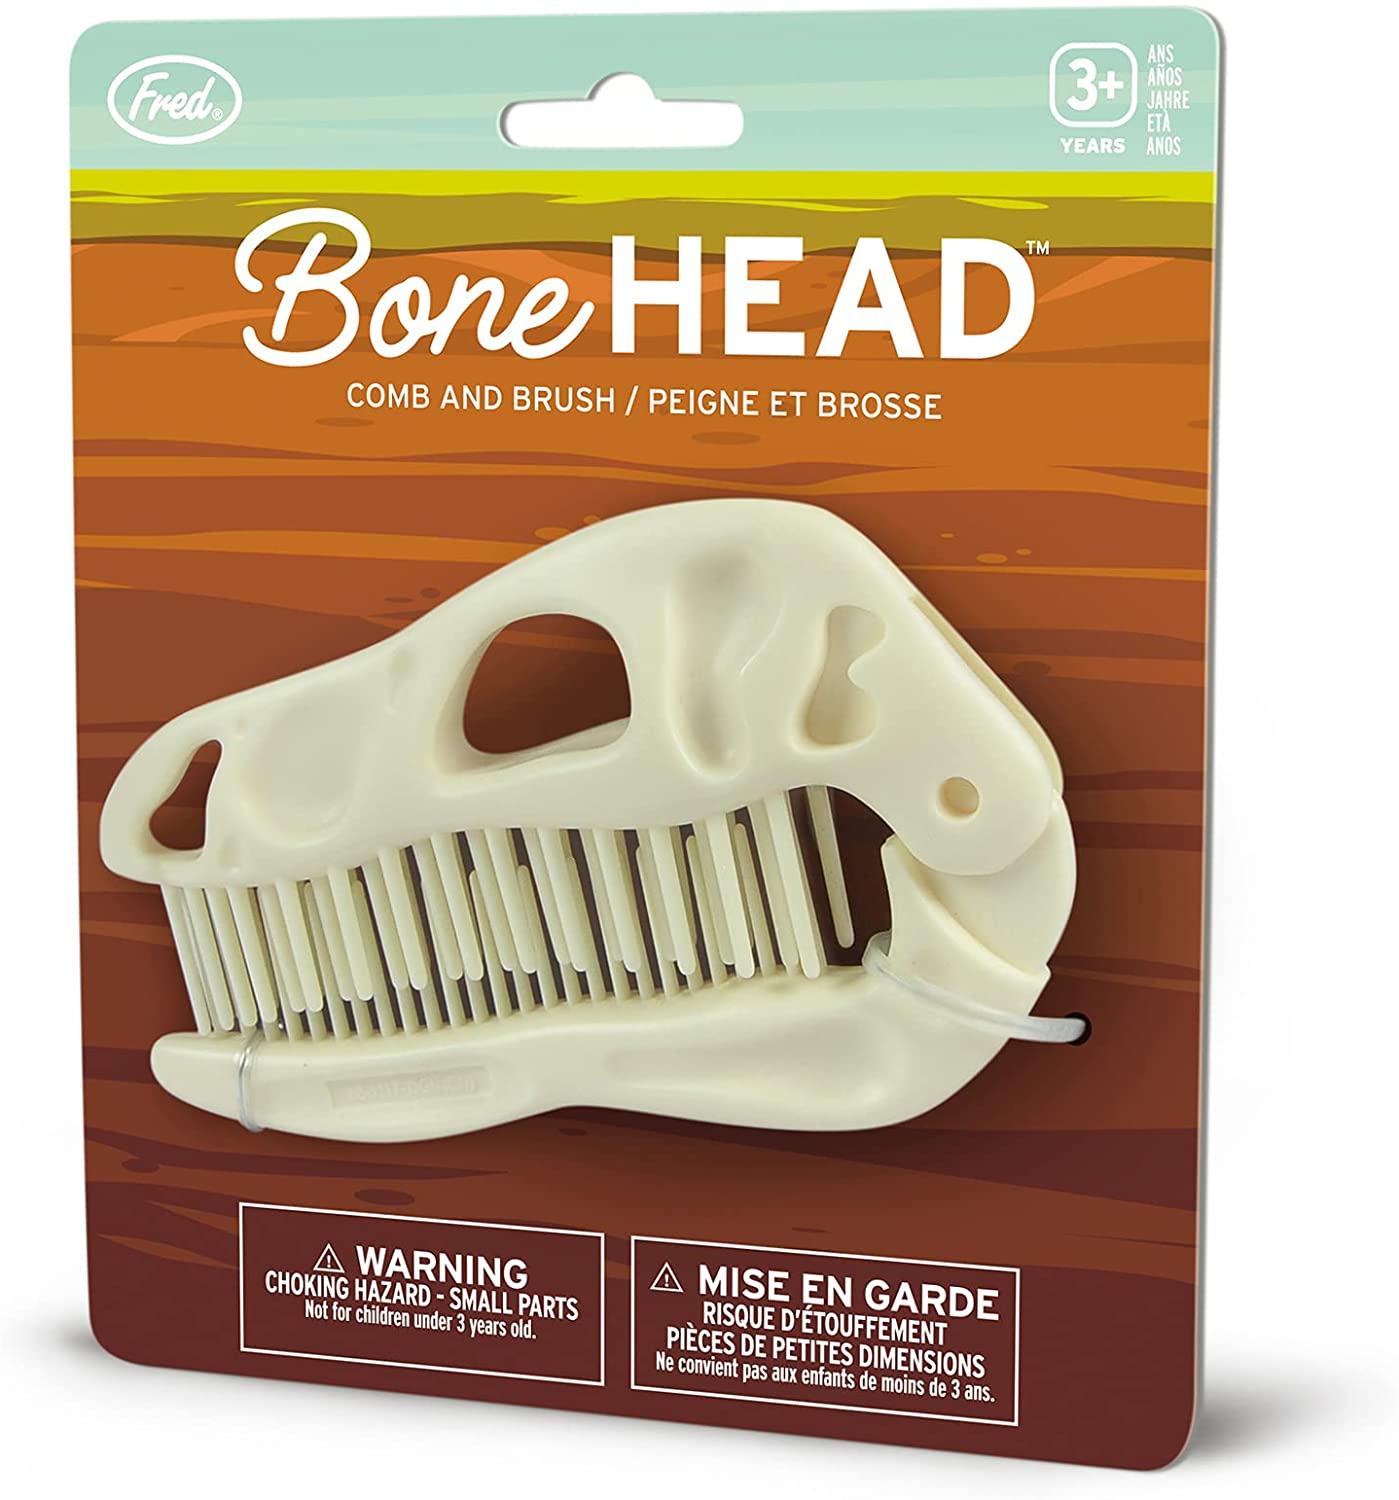 Bonehead Folding Comb and Brush